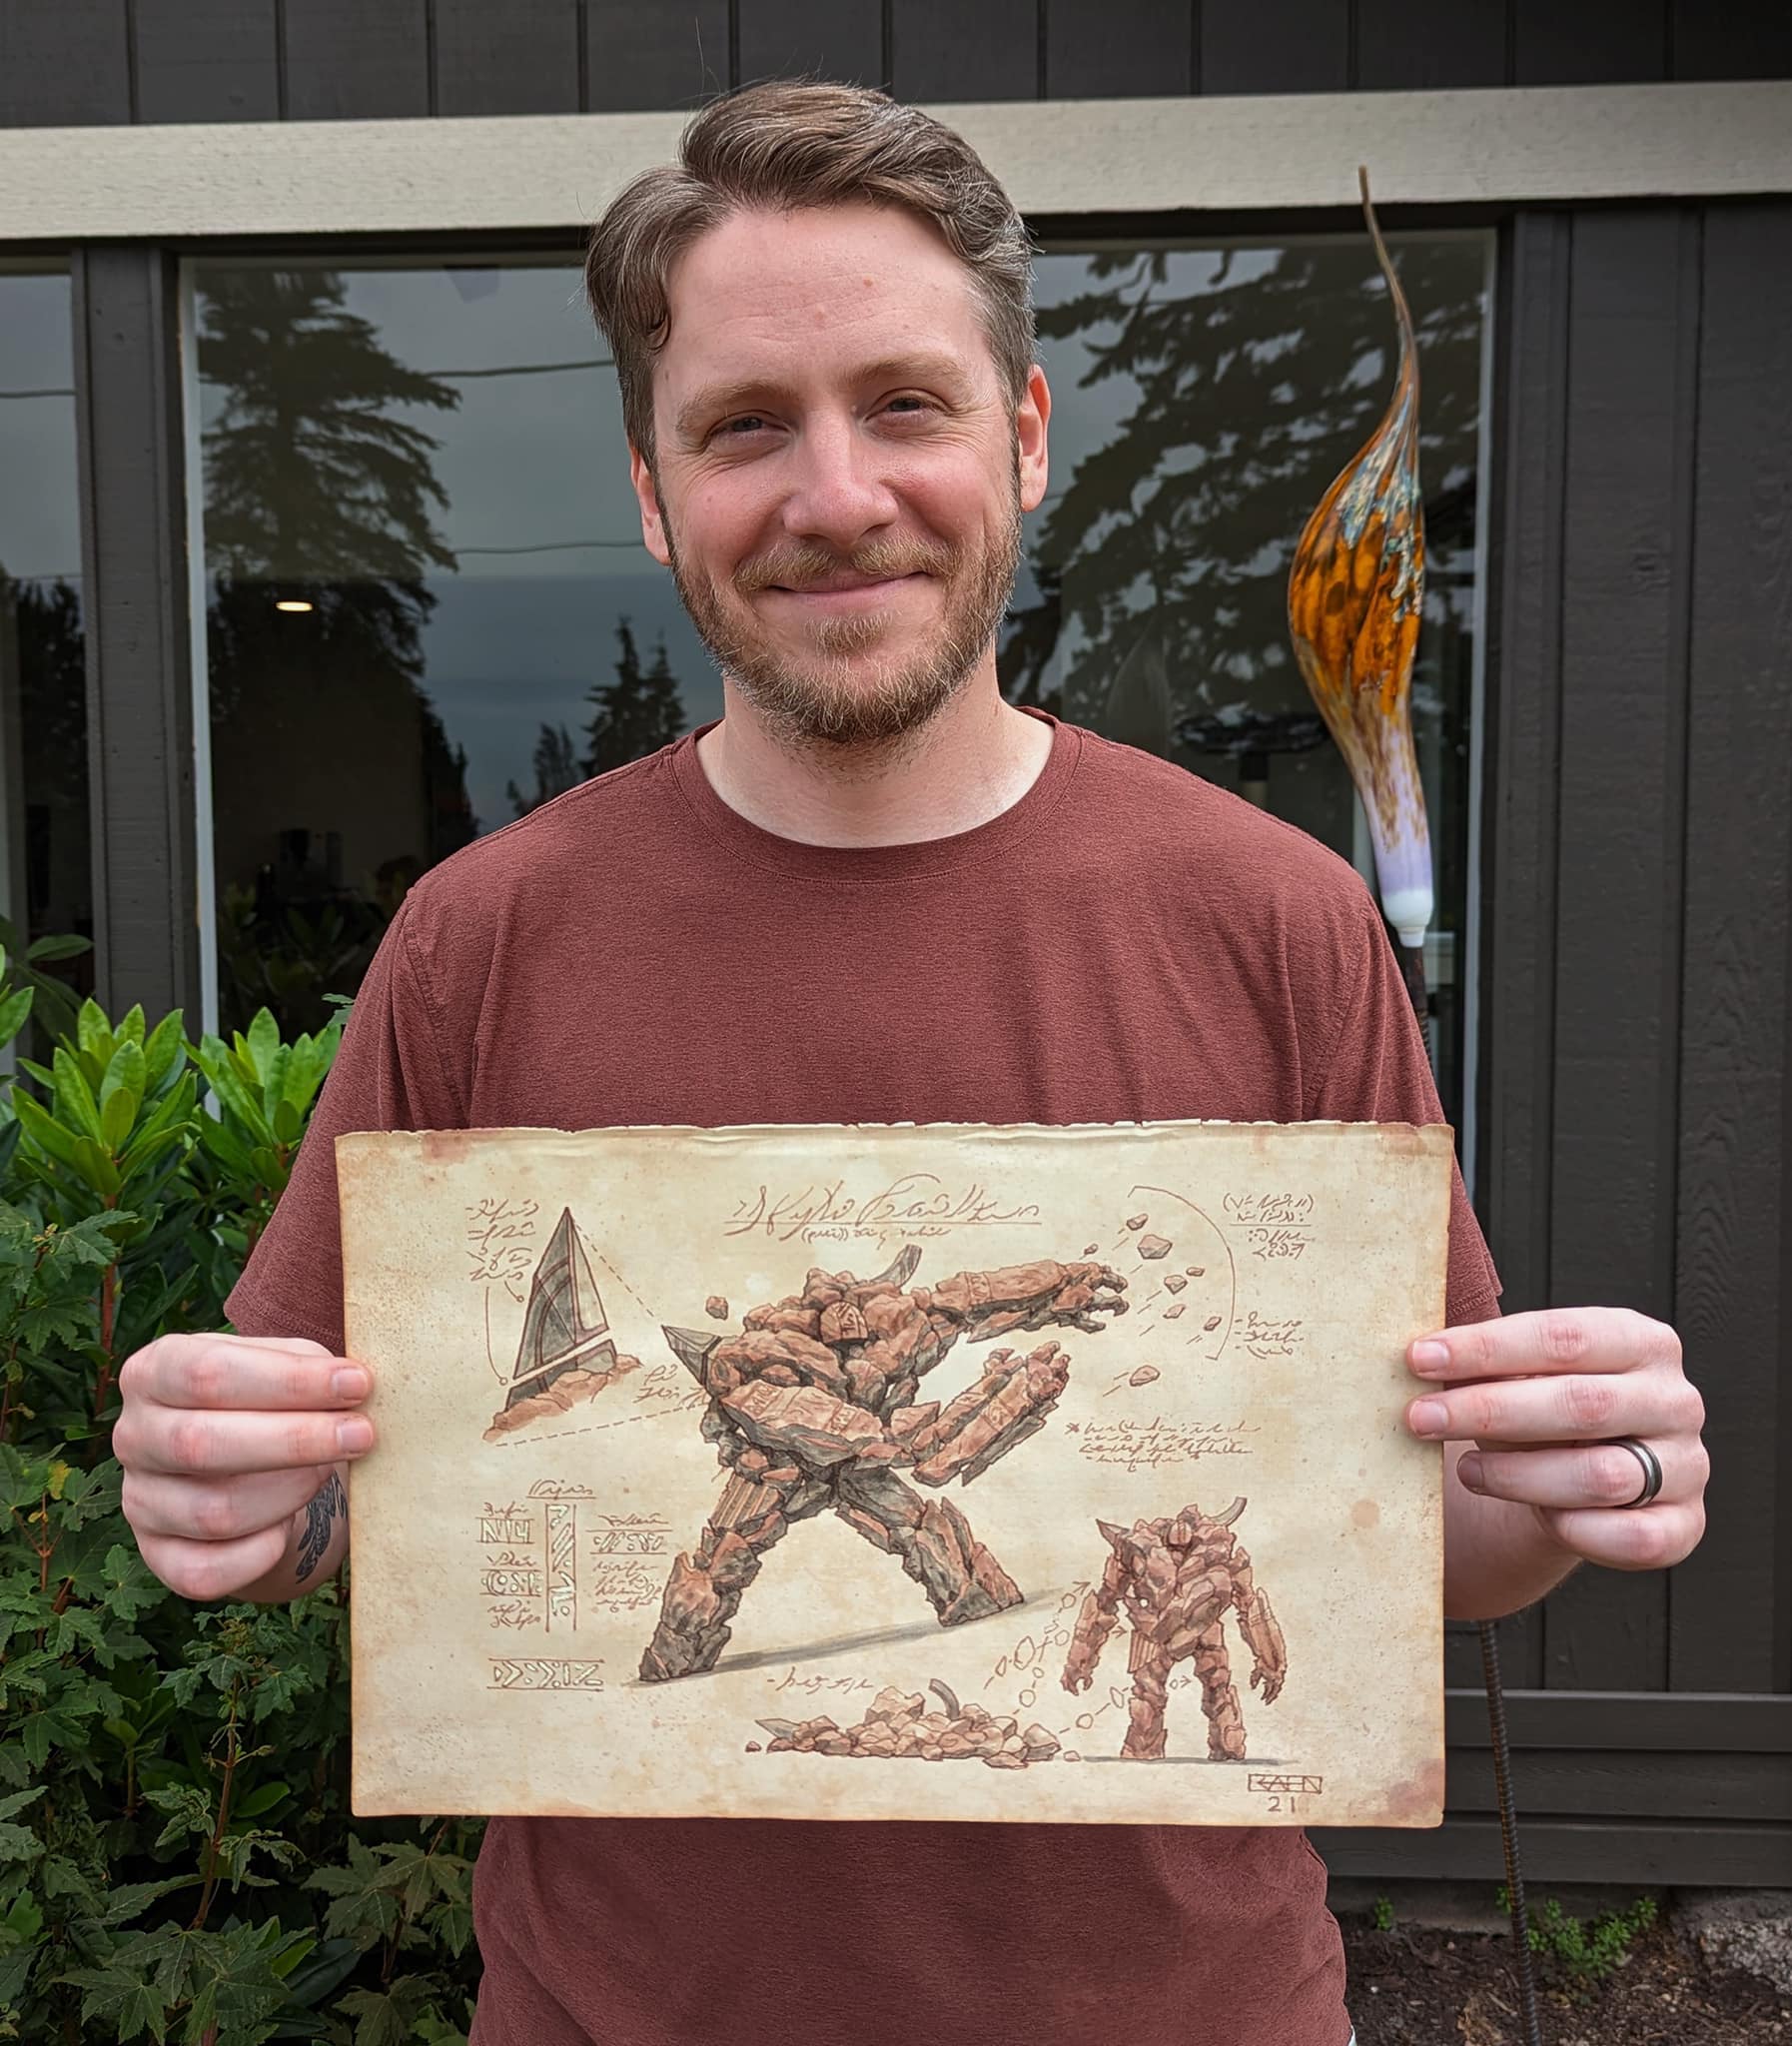 Chris Rahn posing with his Lodestone Golem illustration.